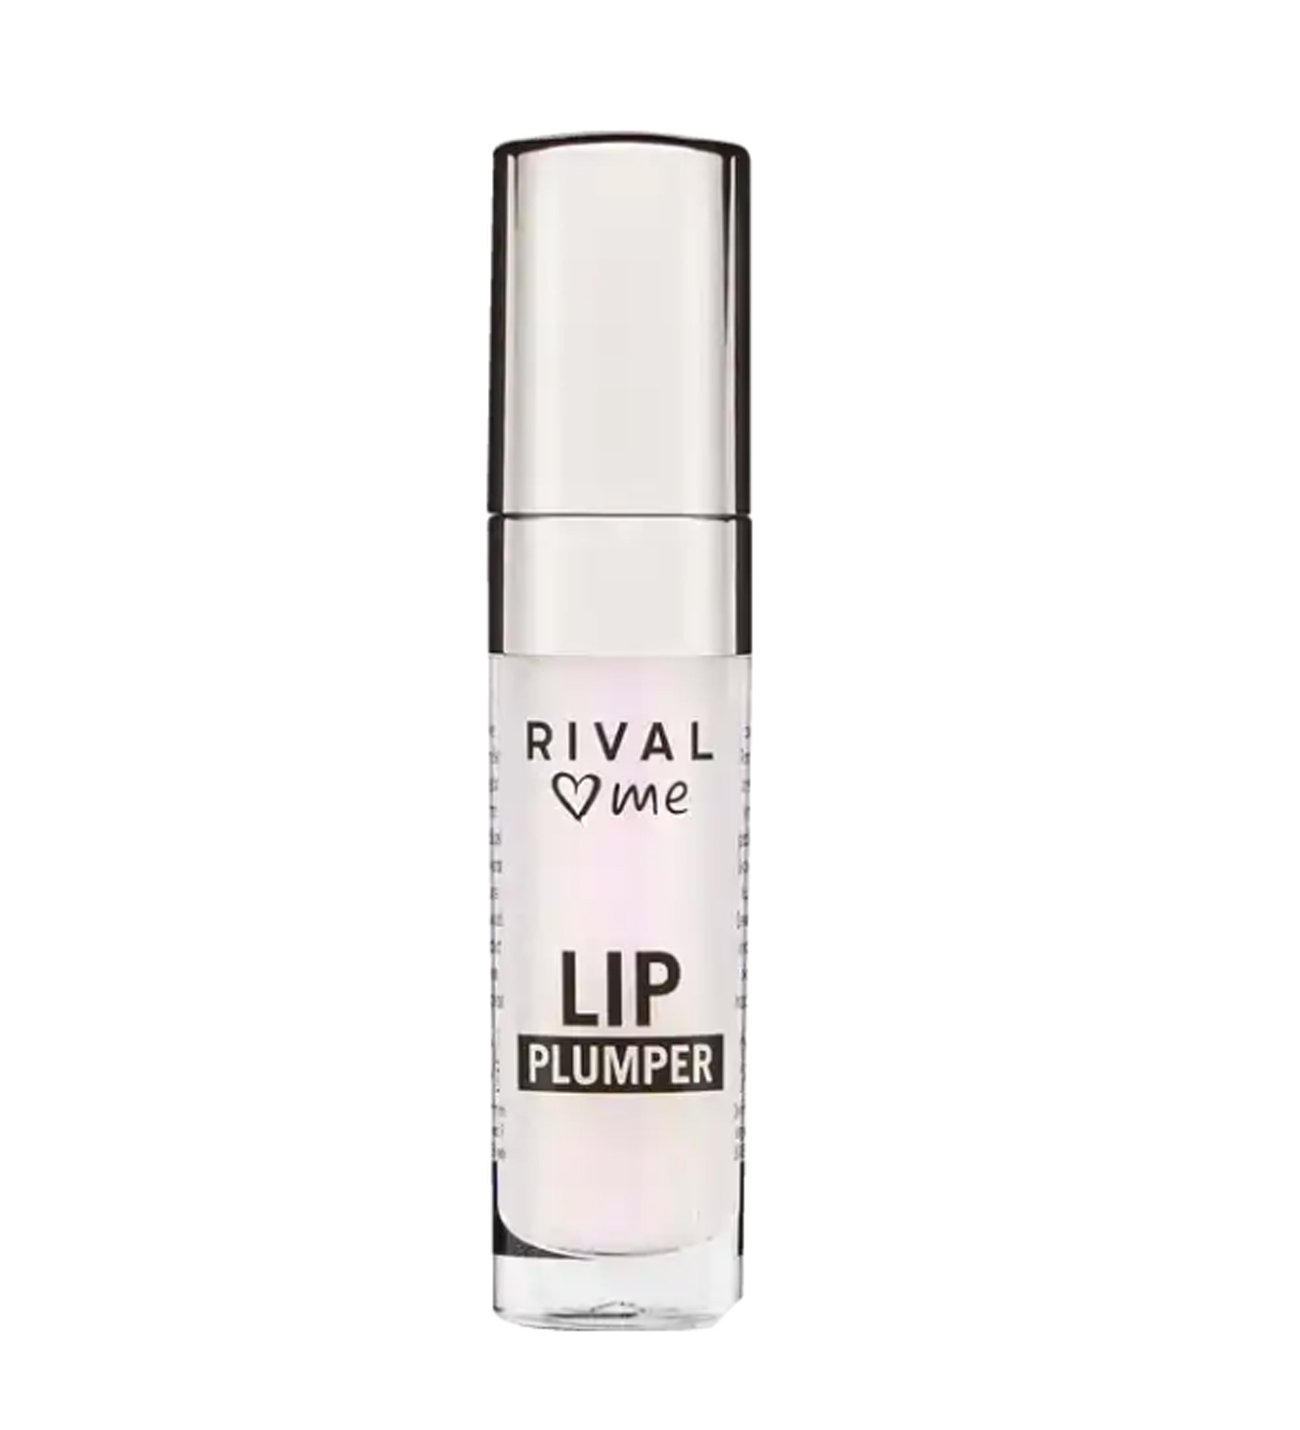 RIVAL loves me Lip Plumper